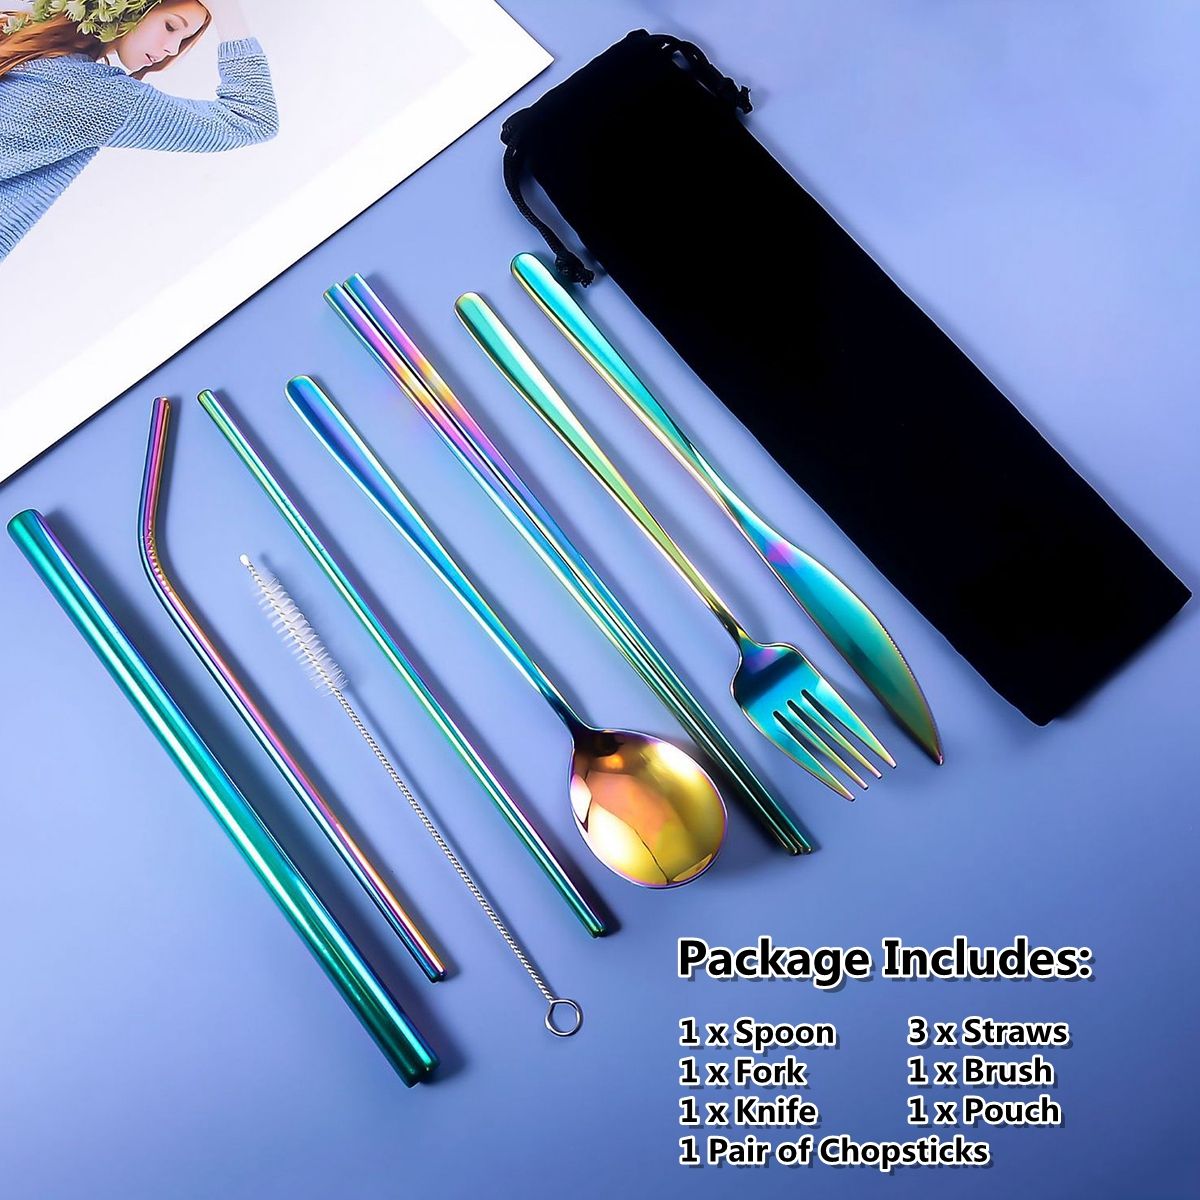 9pcs-Titanium-Plated-304-Stainless-Steel-Cutlery-Set-Knife-Fork-Spoon-Chopsticks-Straw-Set-1721637